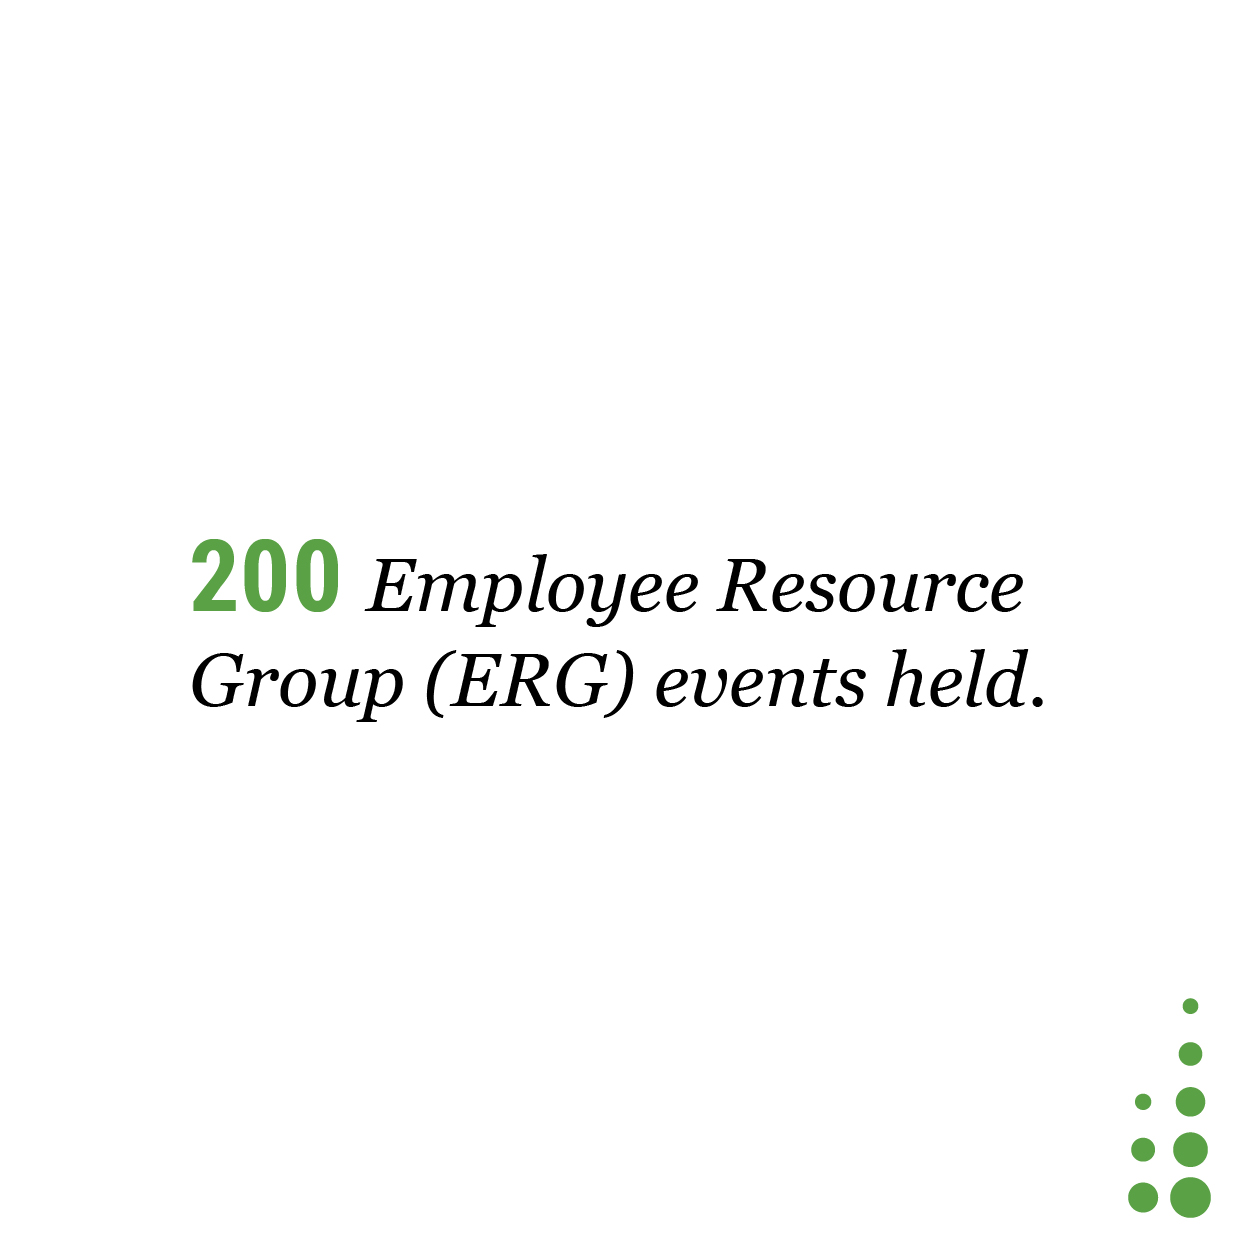 200 Employee Resource Group (ERG) events held.